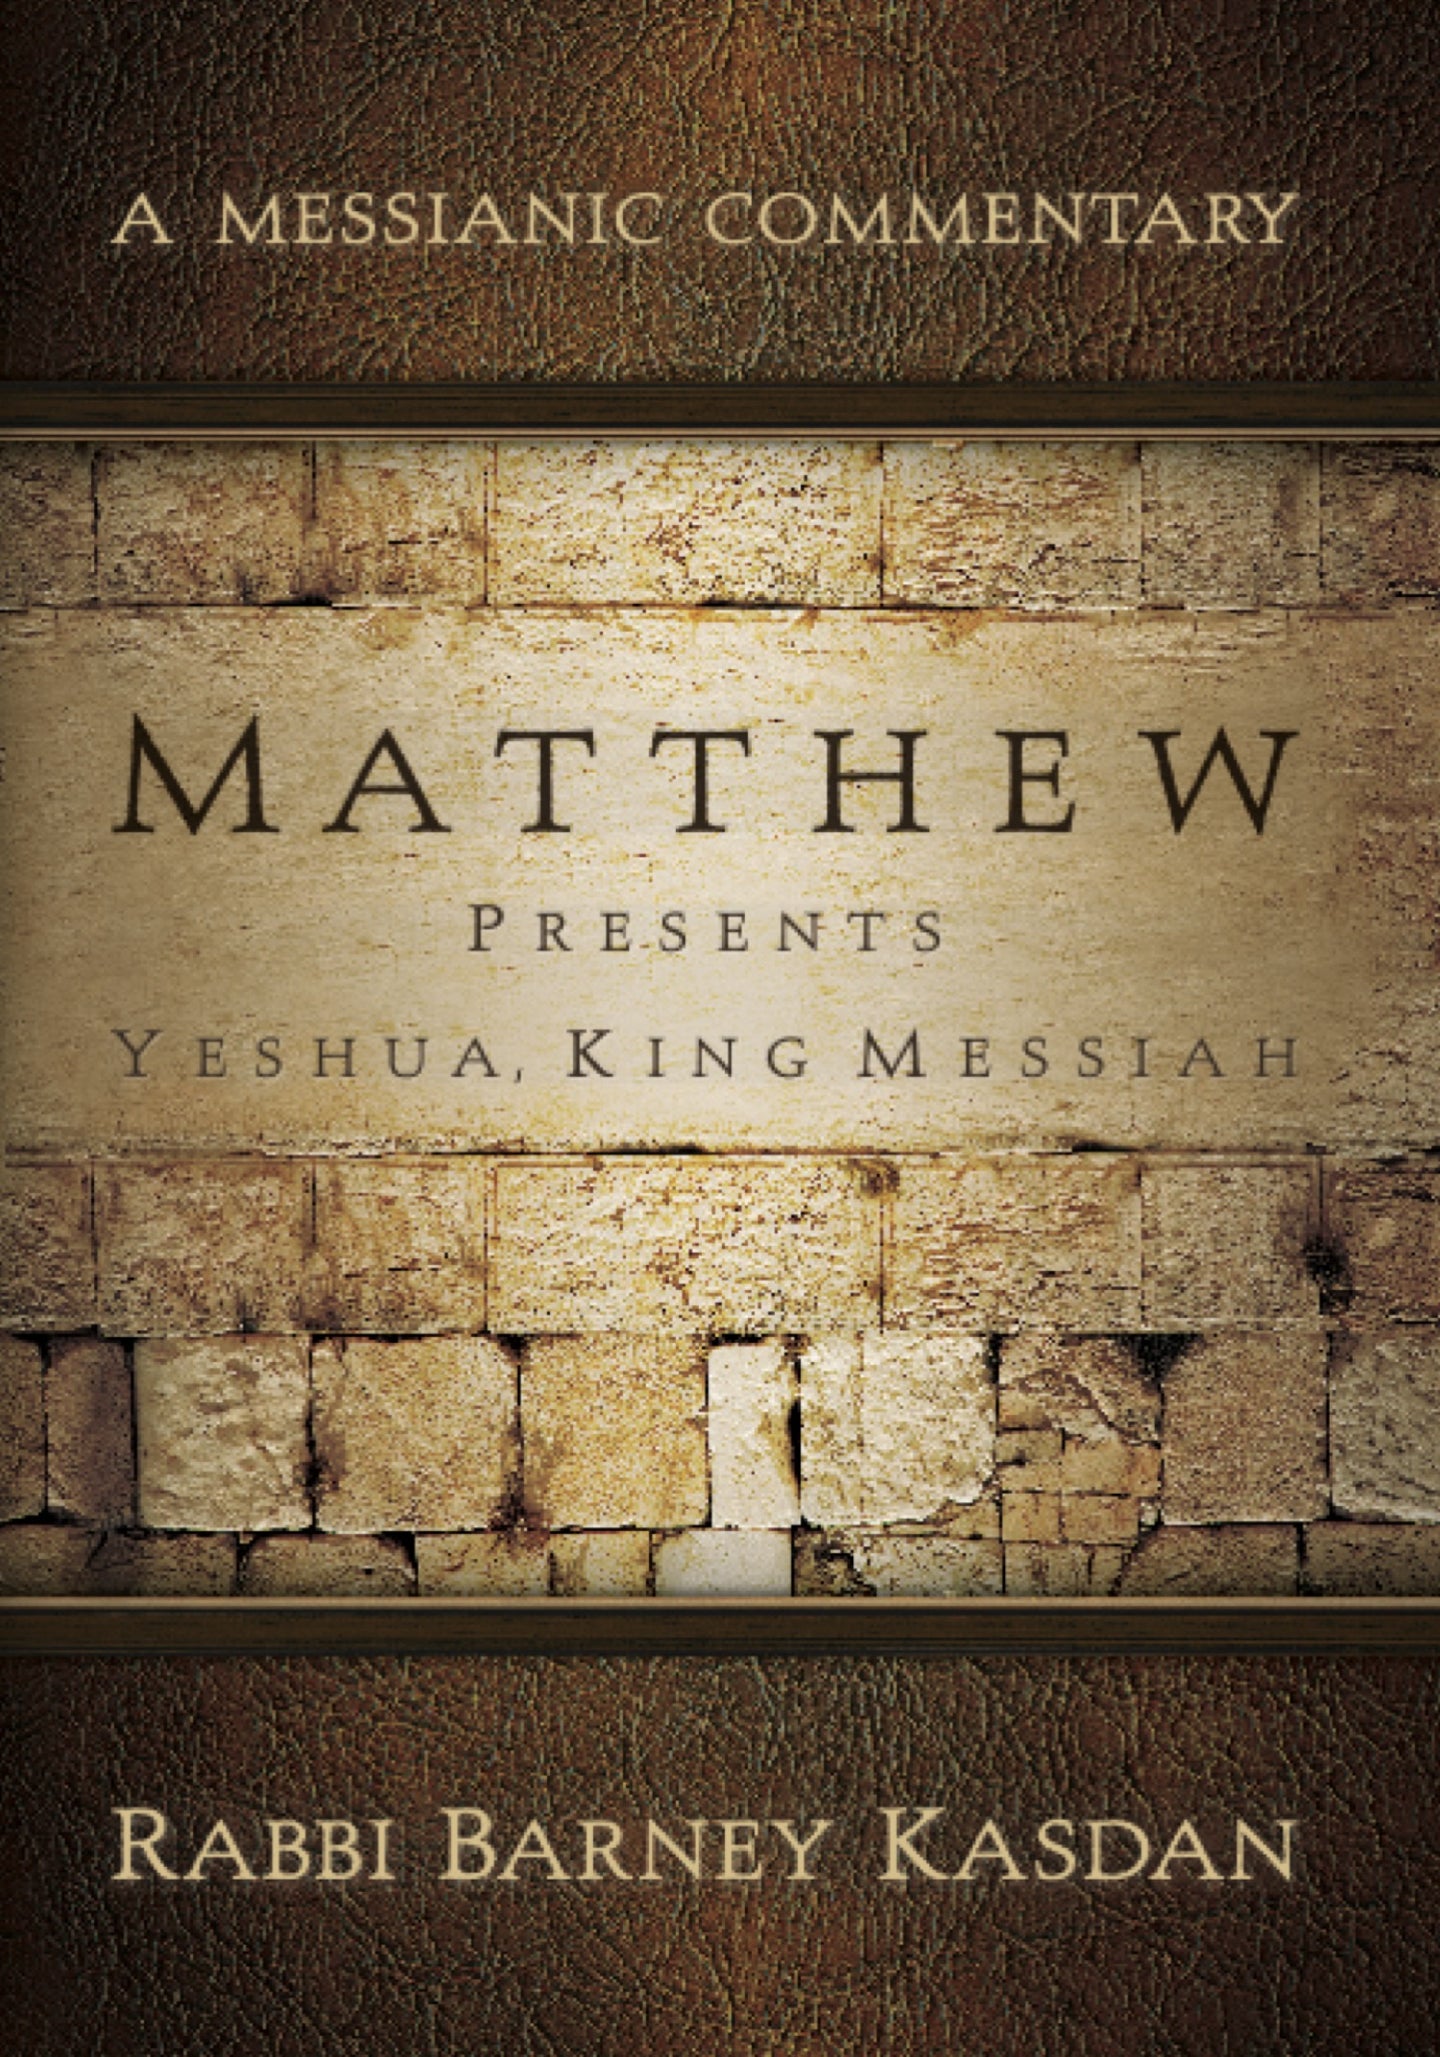 A Messianic Commentary: Matthew Presents Yeshua, King Messiah by Rabbi Barney Kasdan